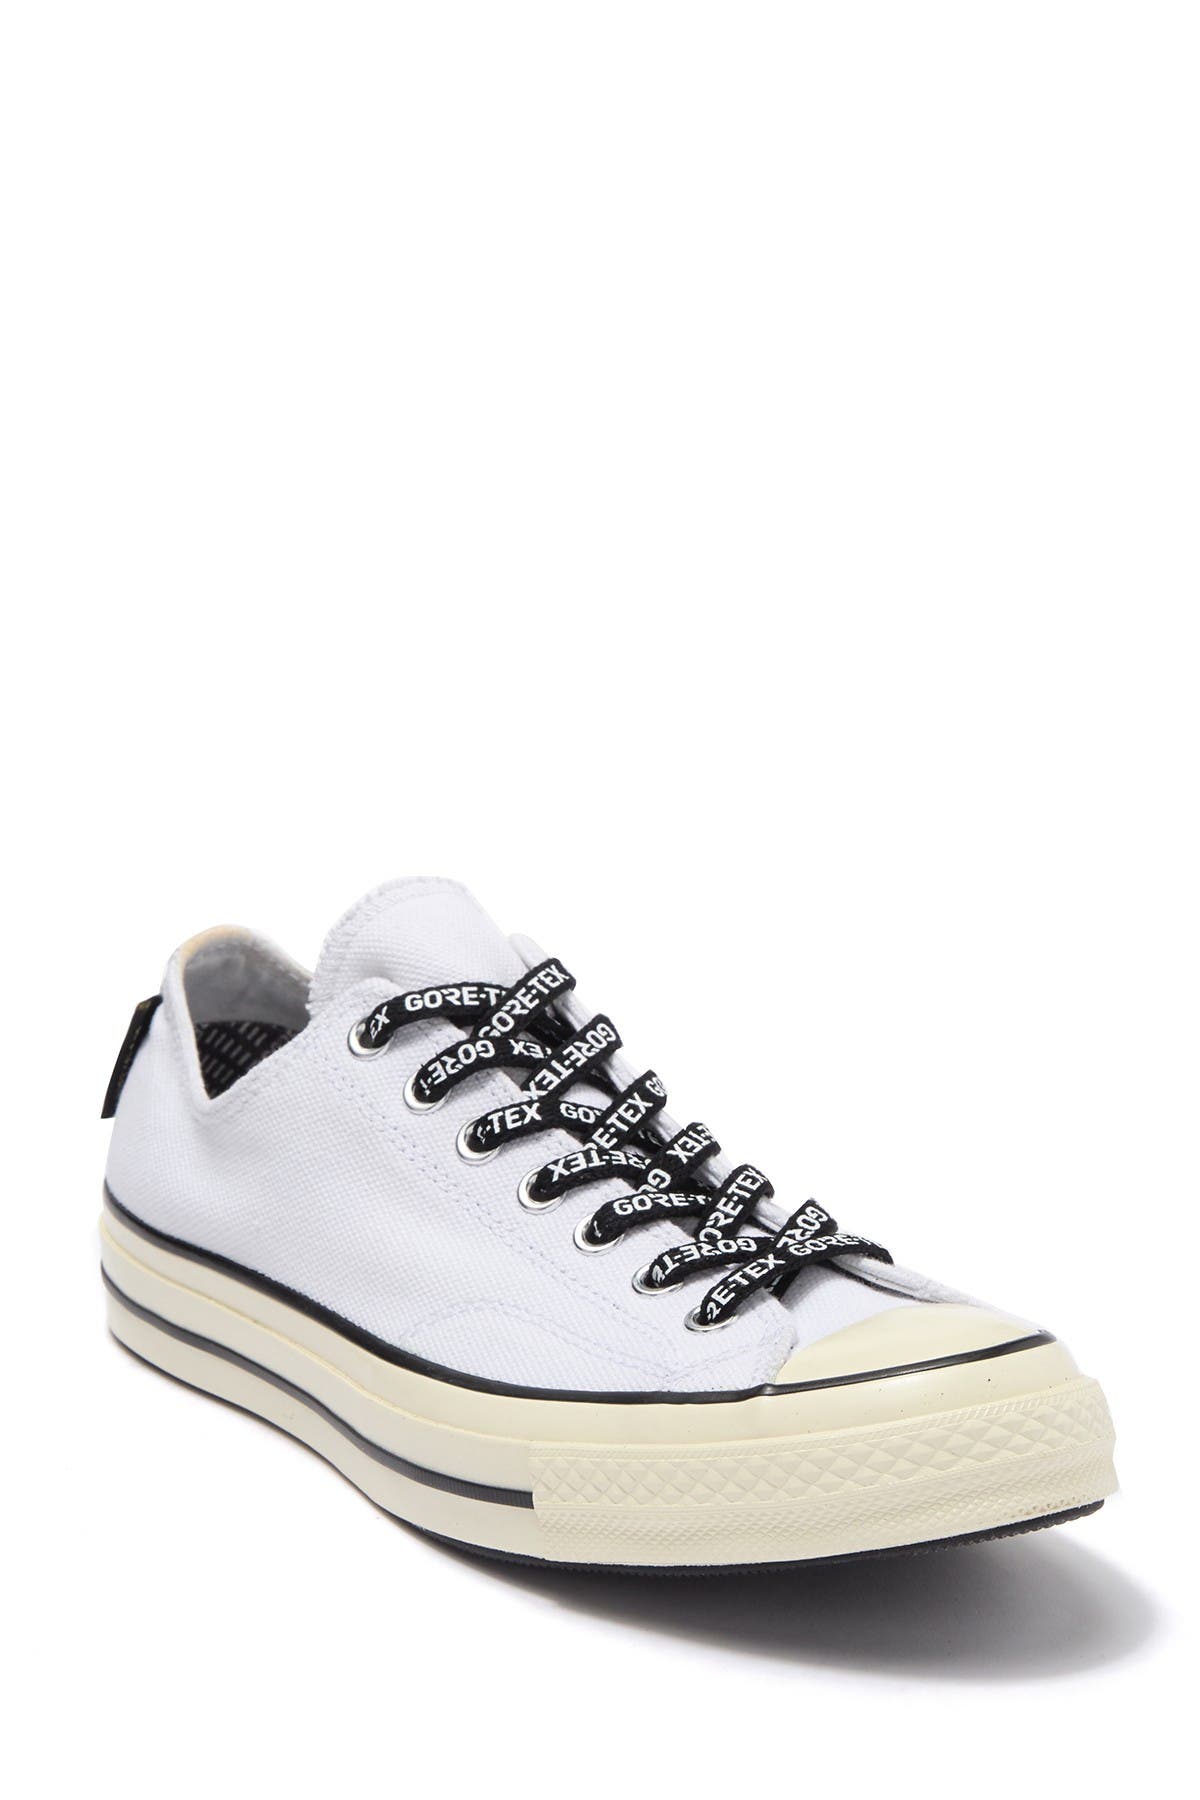 Converse | Chuck 70 Ox White Sneaker 